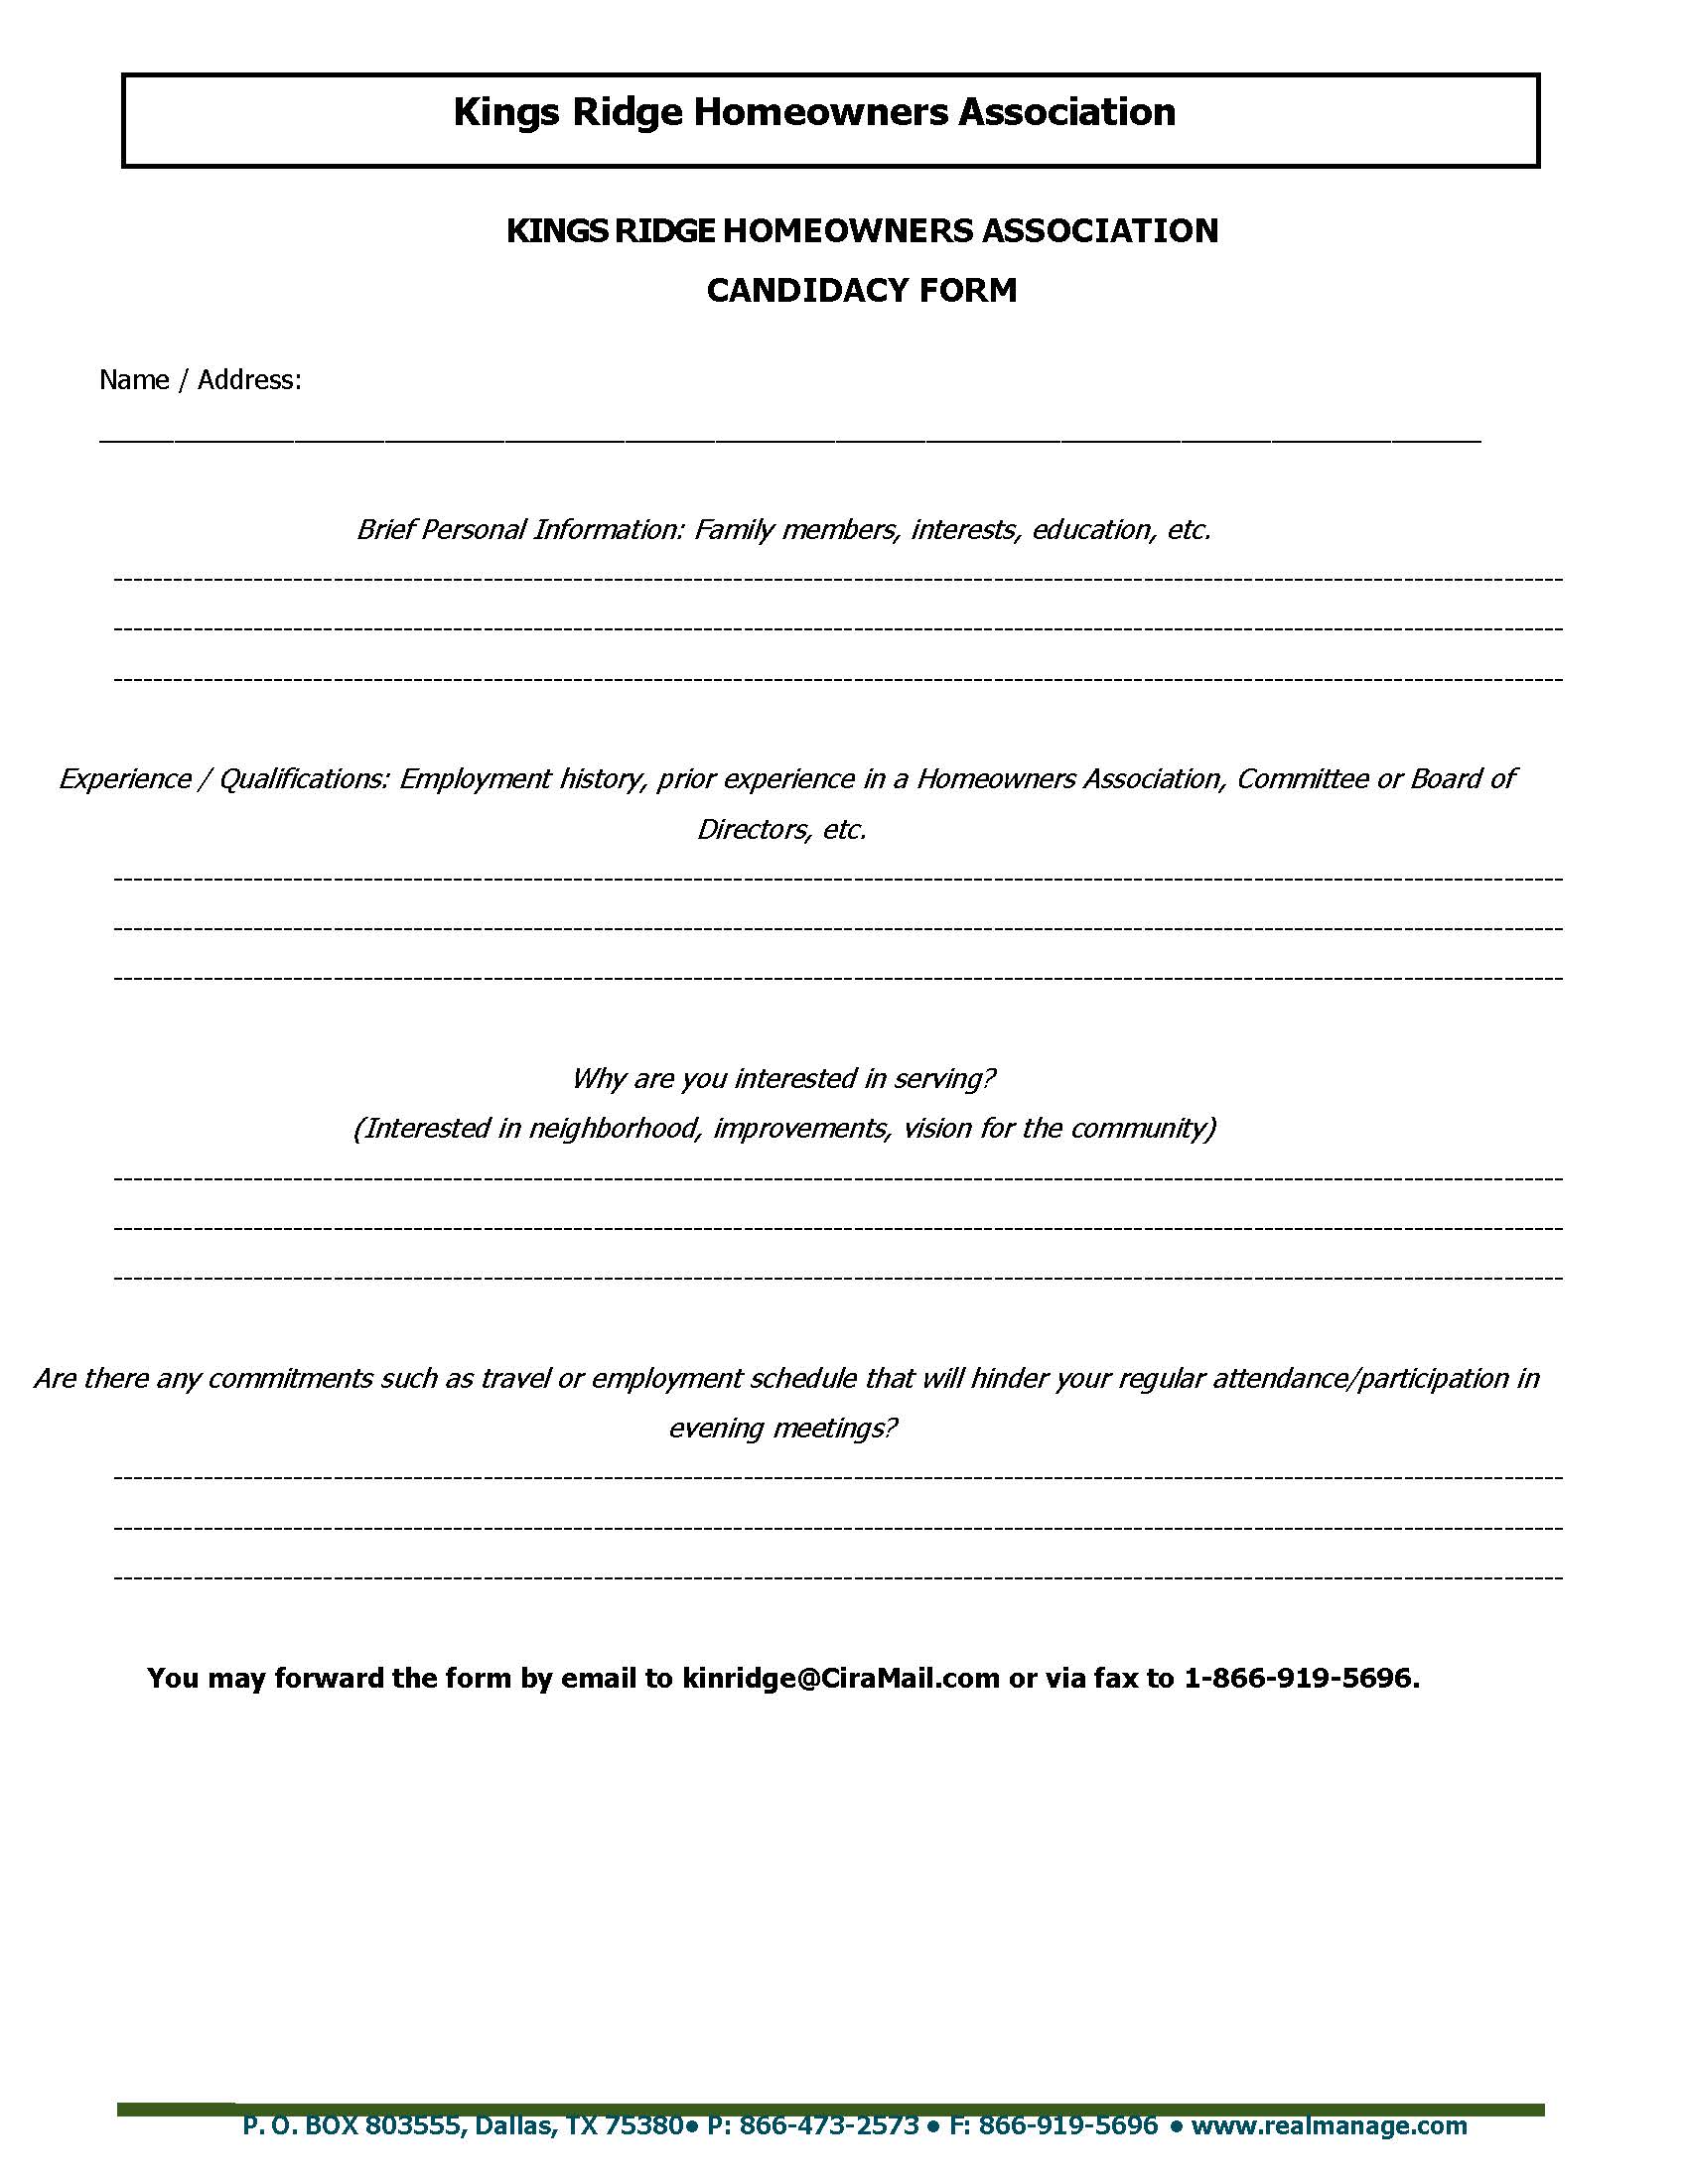 Candidate Form KR(2)(2)